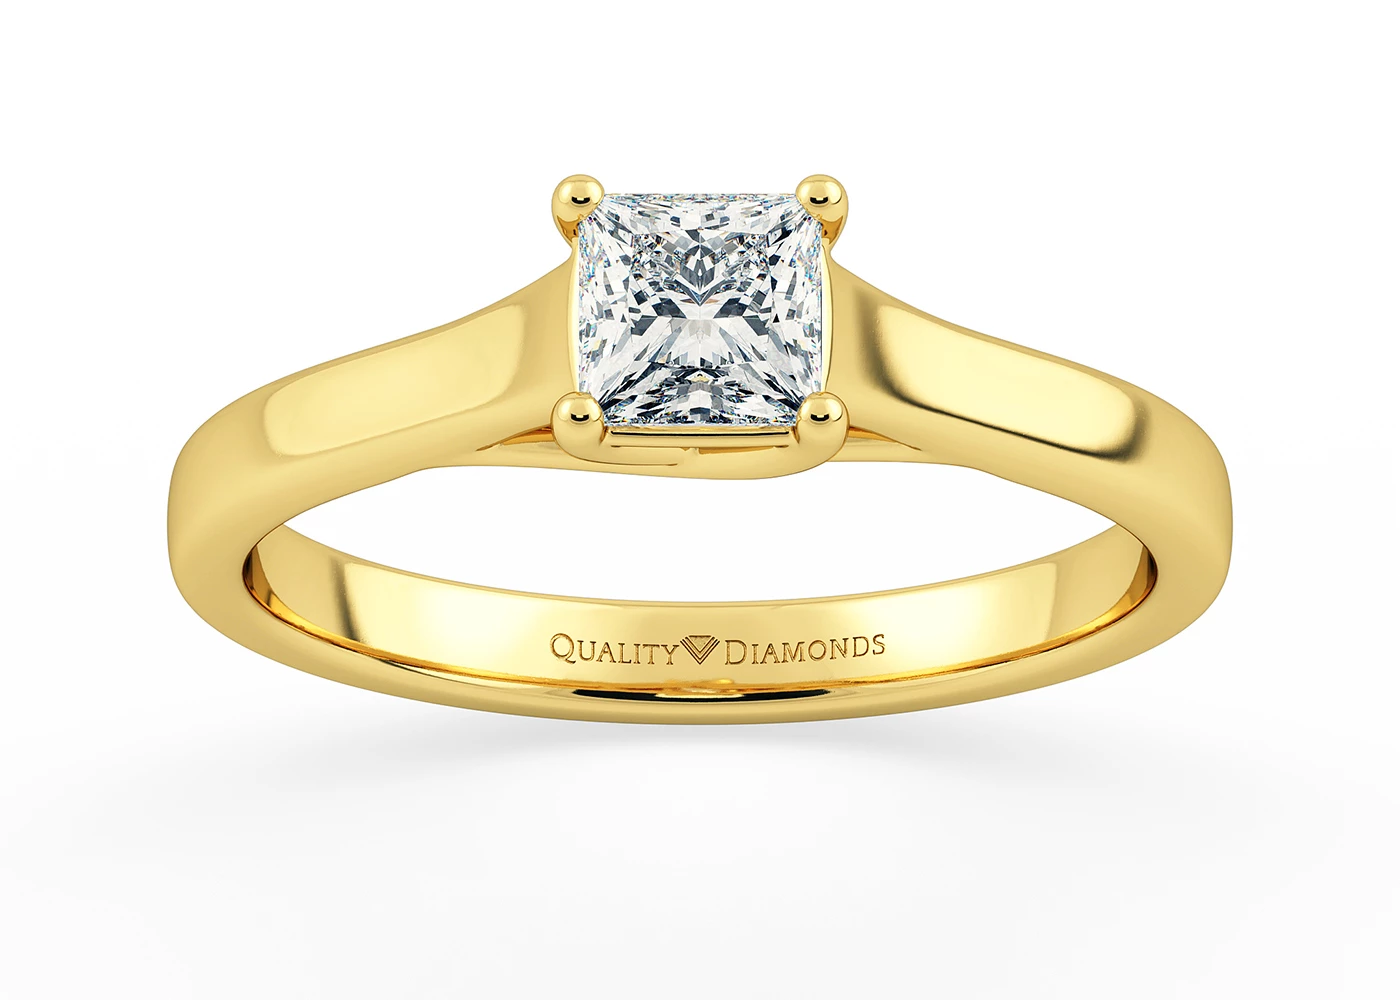 Princess Hita Diamond Ring in 18K Yellow Gold